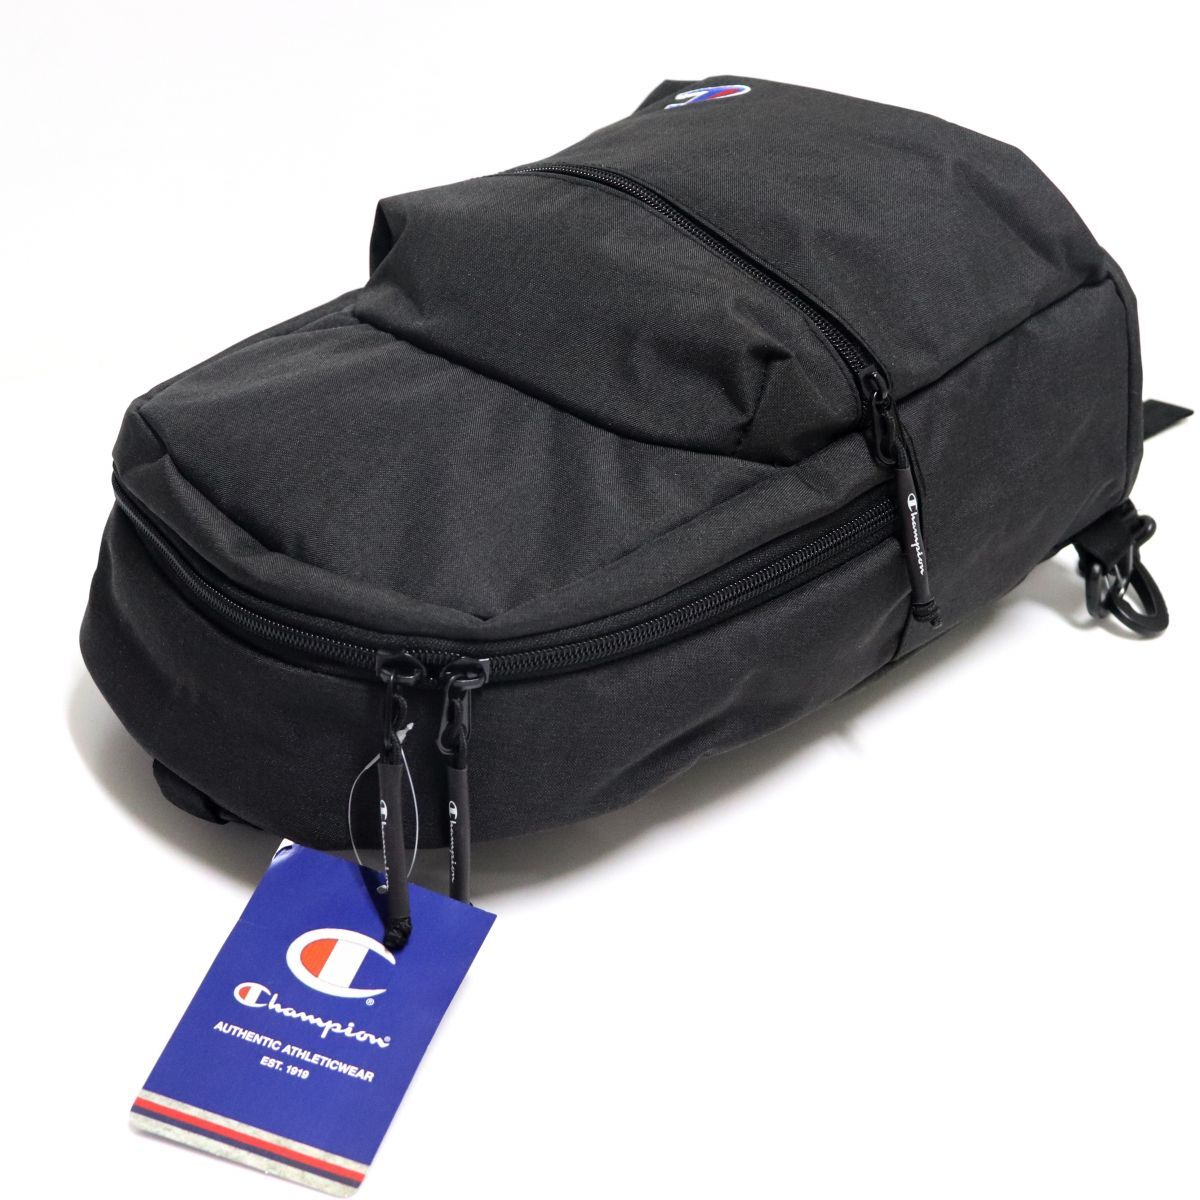 * Champion Champion new goods Cross over rucksack backpack daypack BAG bag black [CH1038-0011N] one six *QWER QQAA-46